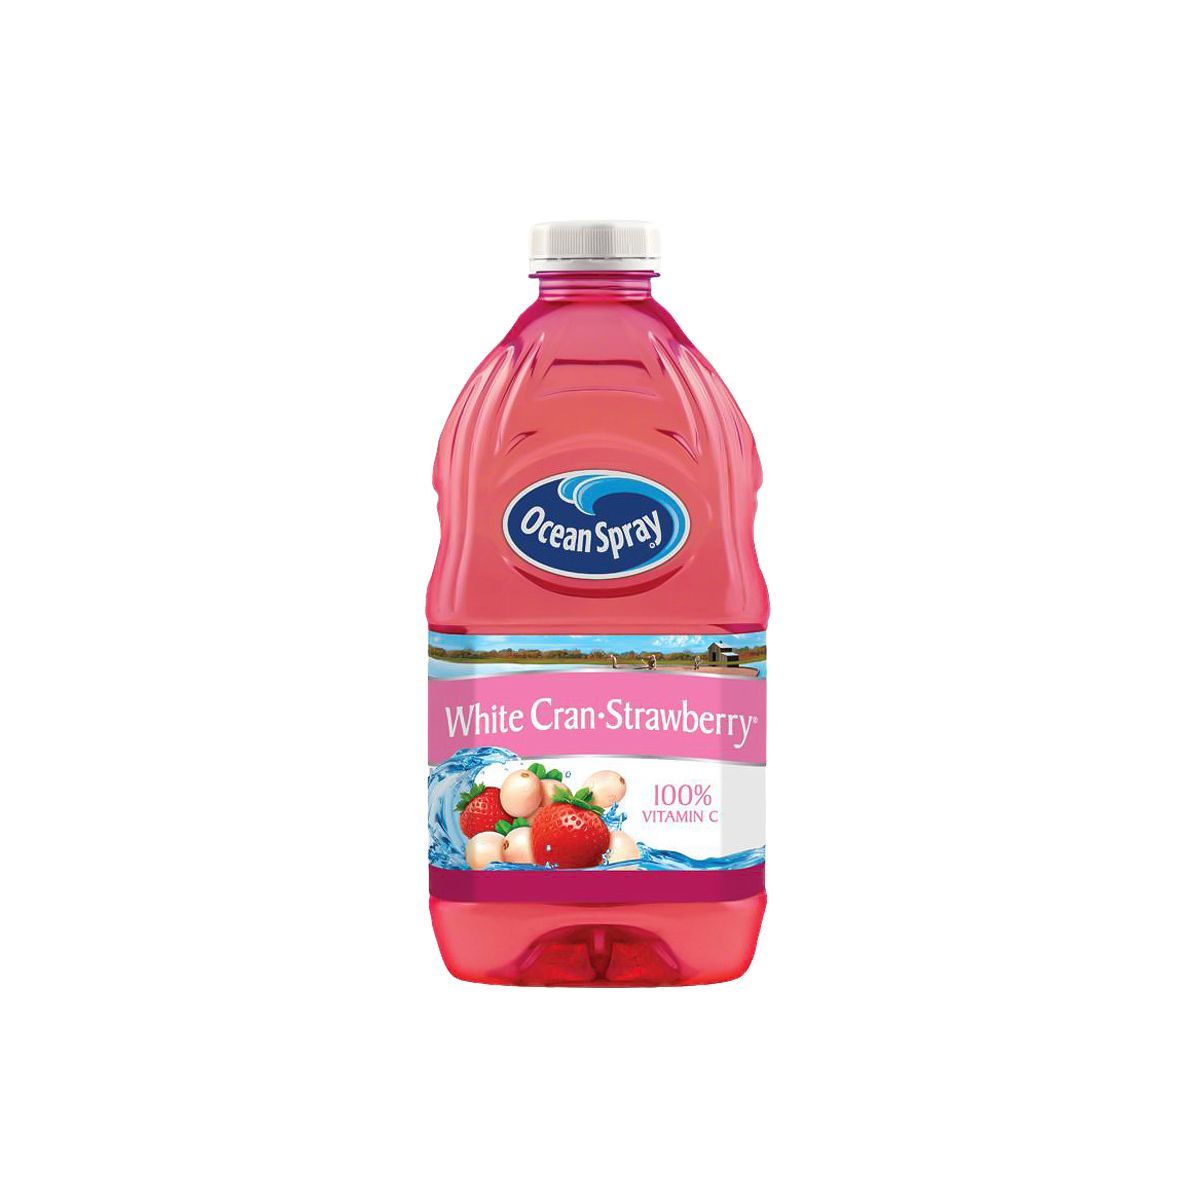 Ocean Spray White Cranberry Strawberry Juice - 64 fl oz Bottle | Target